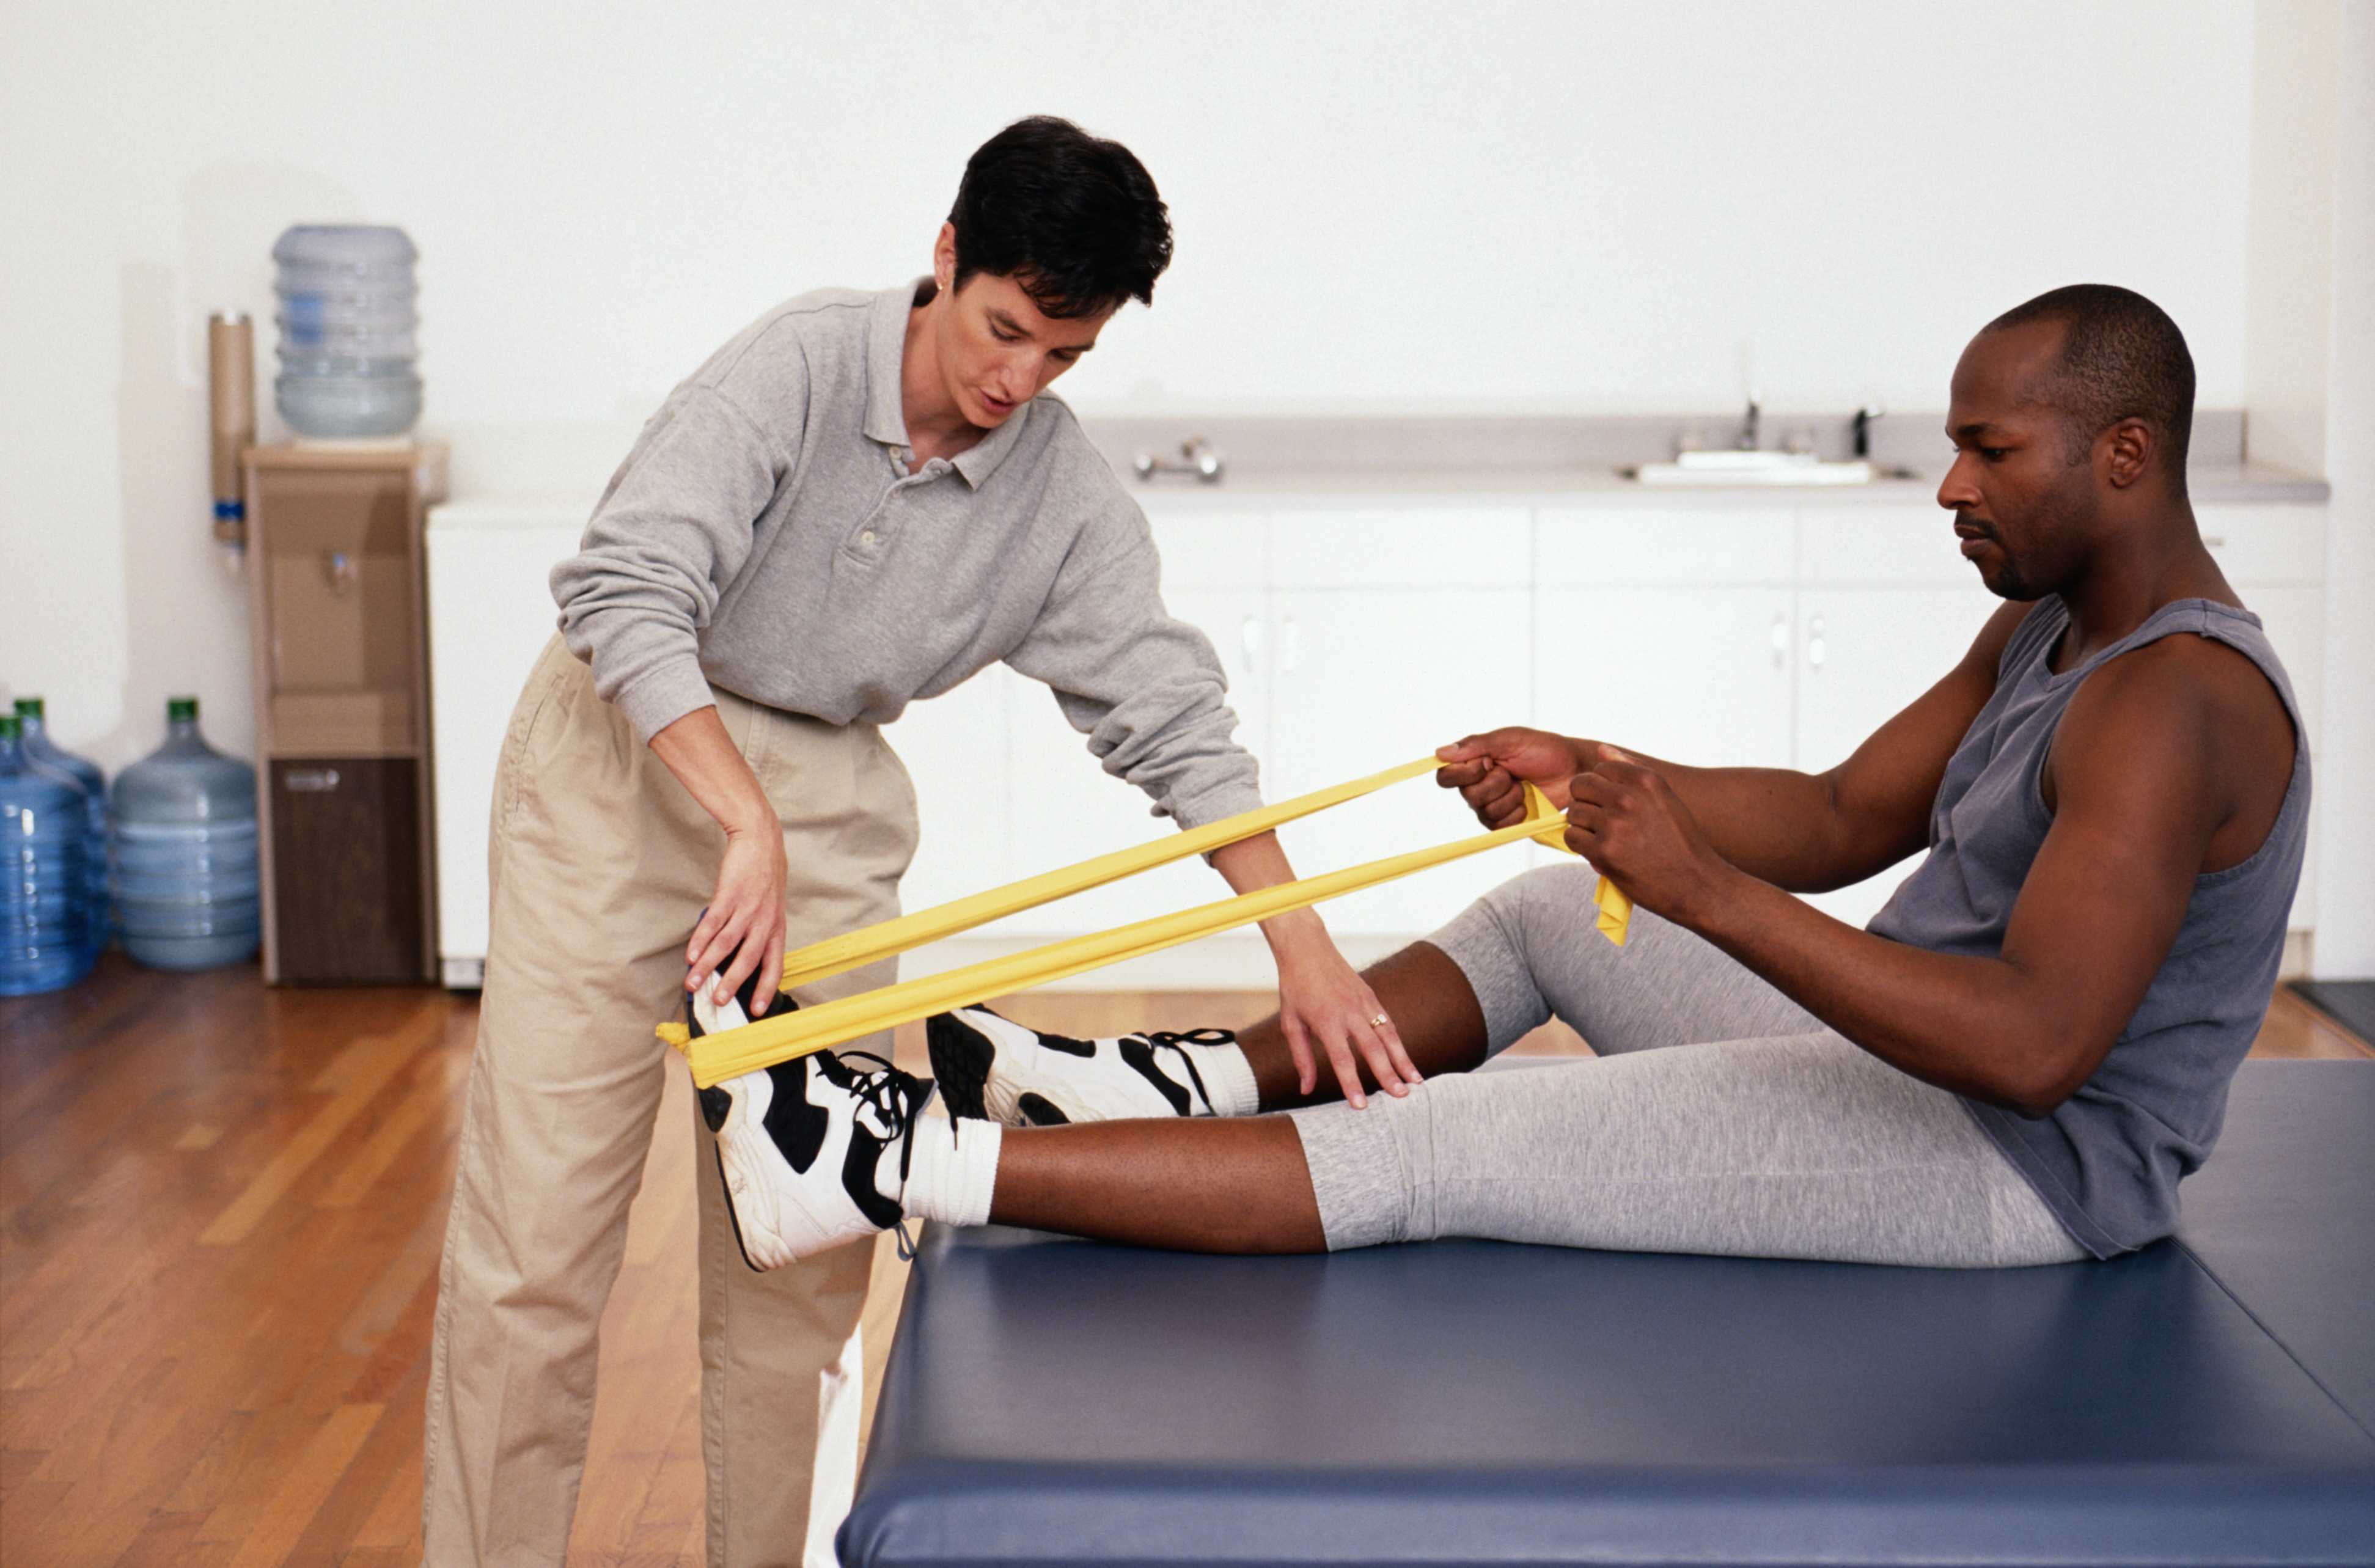 Physical e. Реабилитация после травмы. Реабилитация спортсменов. Реабилитация после спортивных травм. Реабилитация спортсменов после травм.